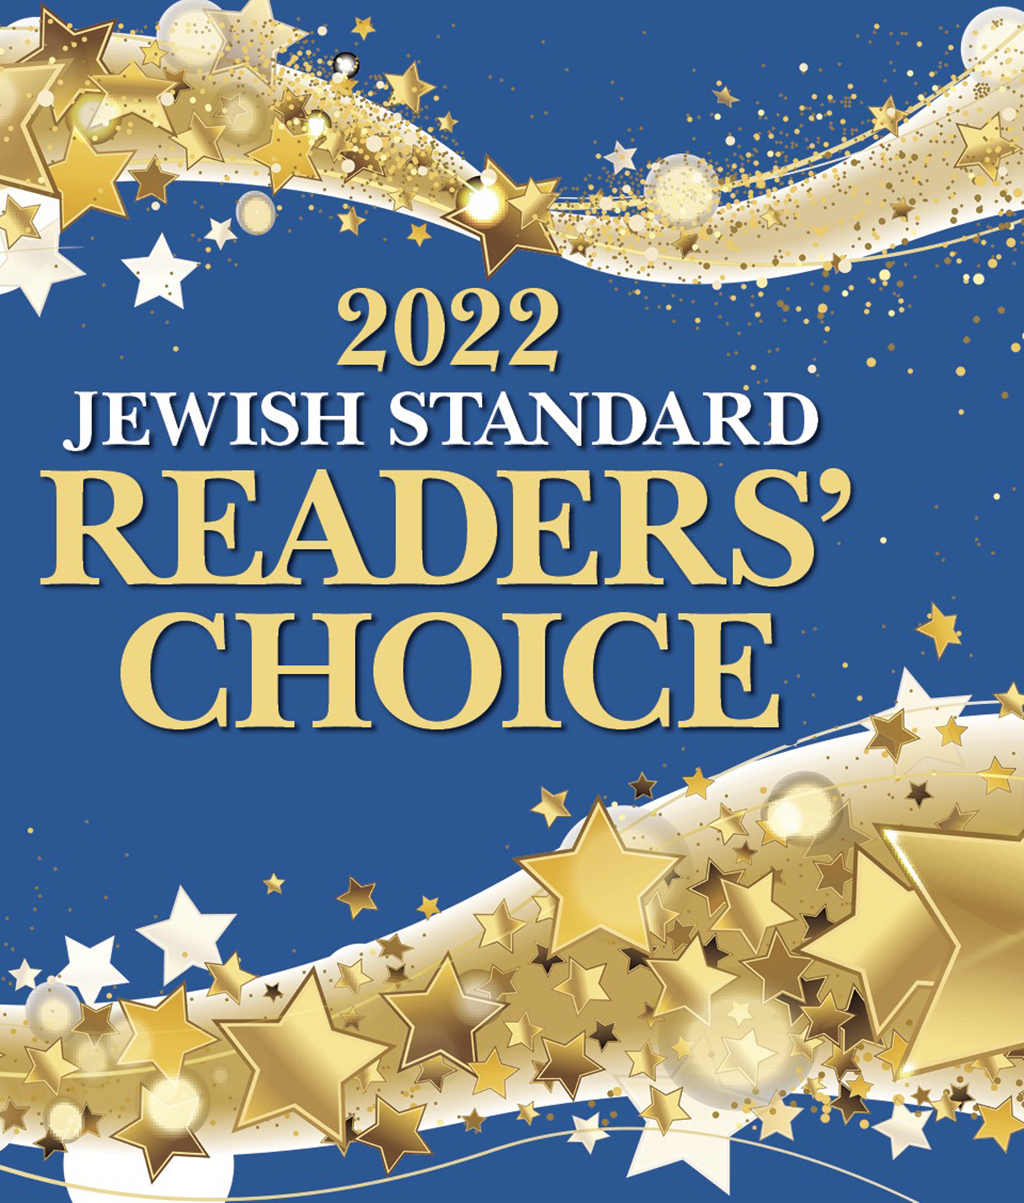 Readers’ Choice, 2022